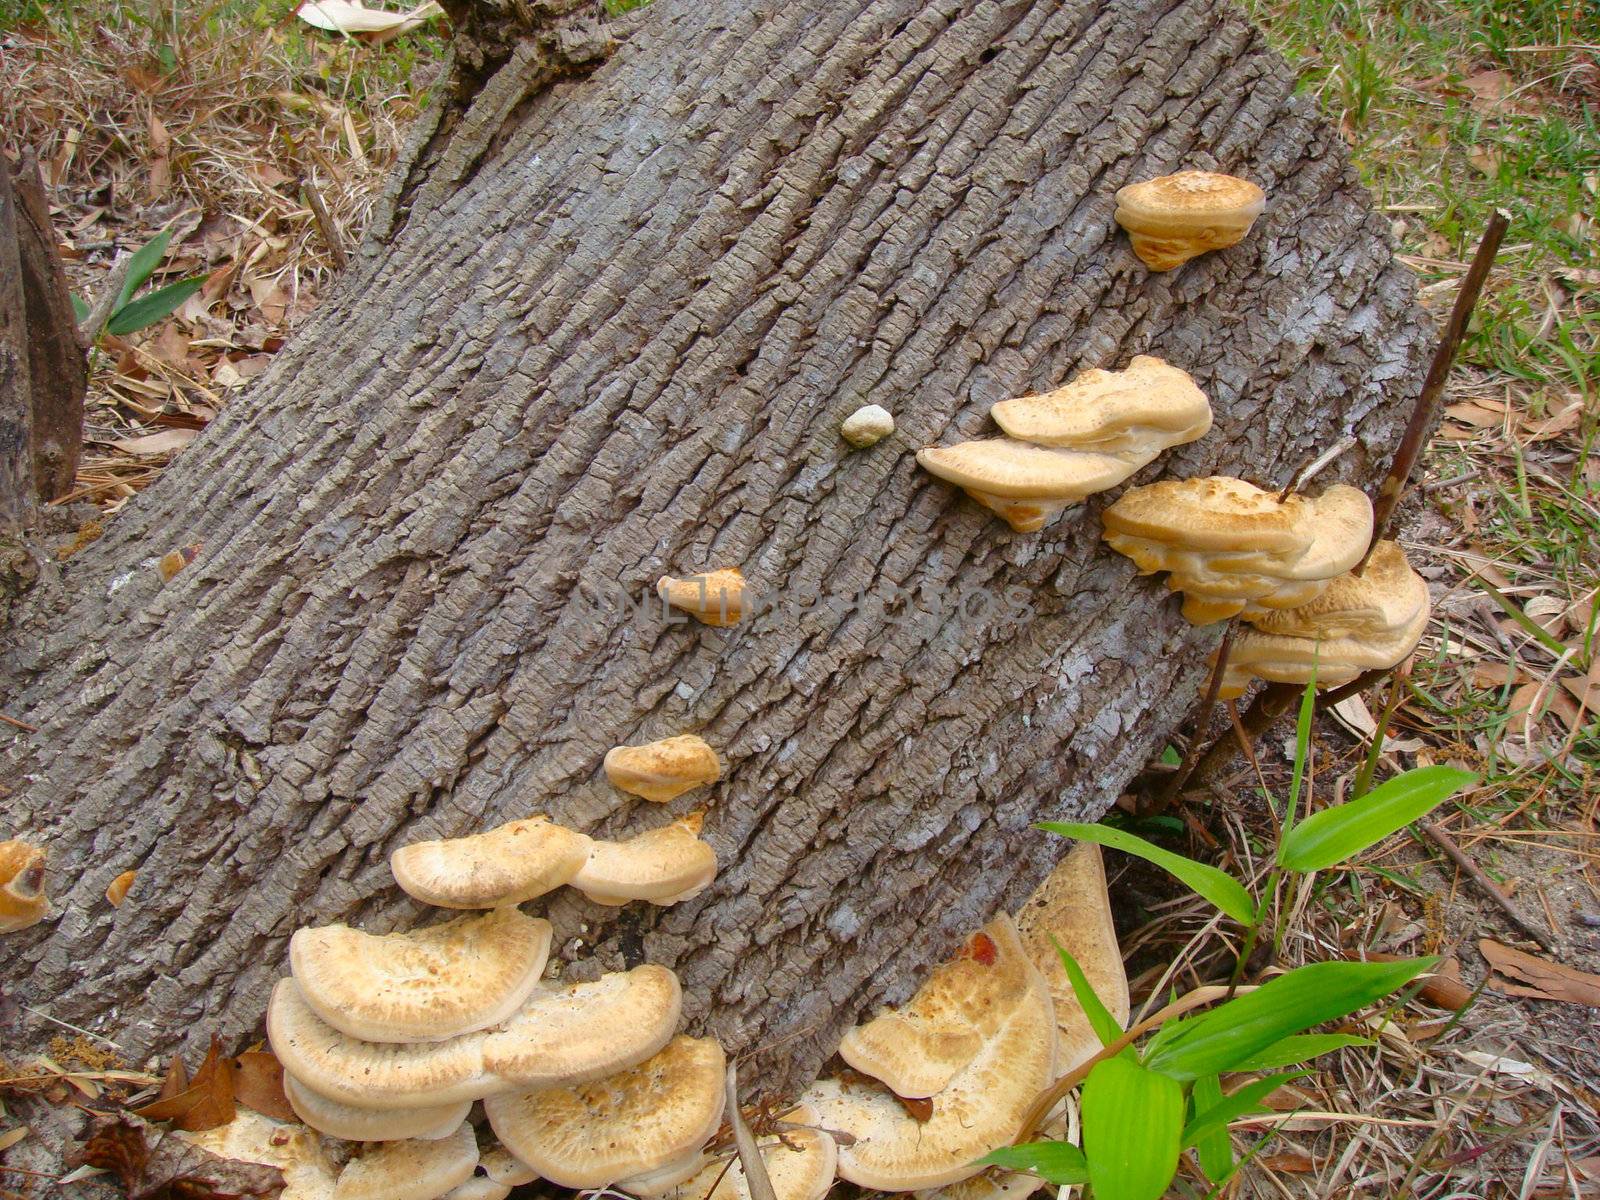 Mushroom fungus growing on an old tree stump at Bellingrath Gardens, Alabama.